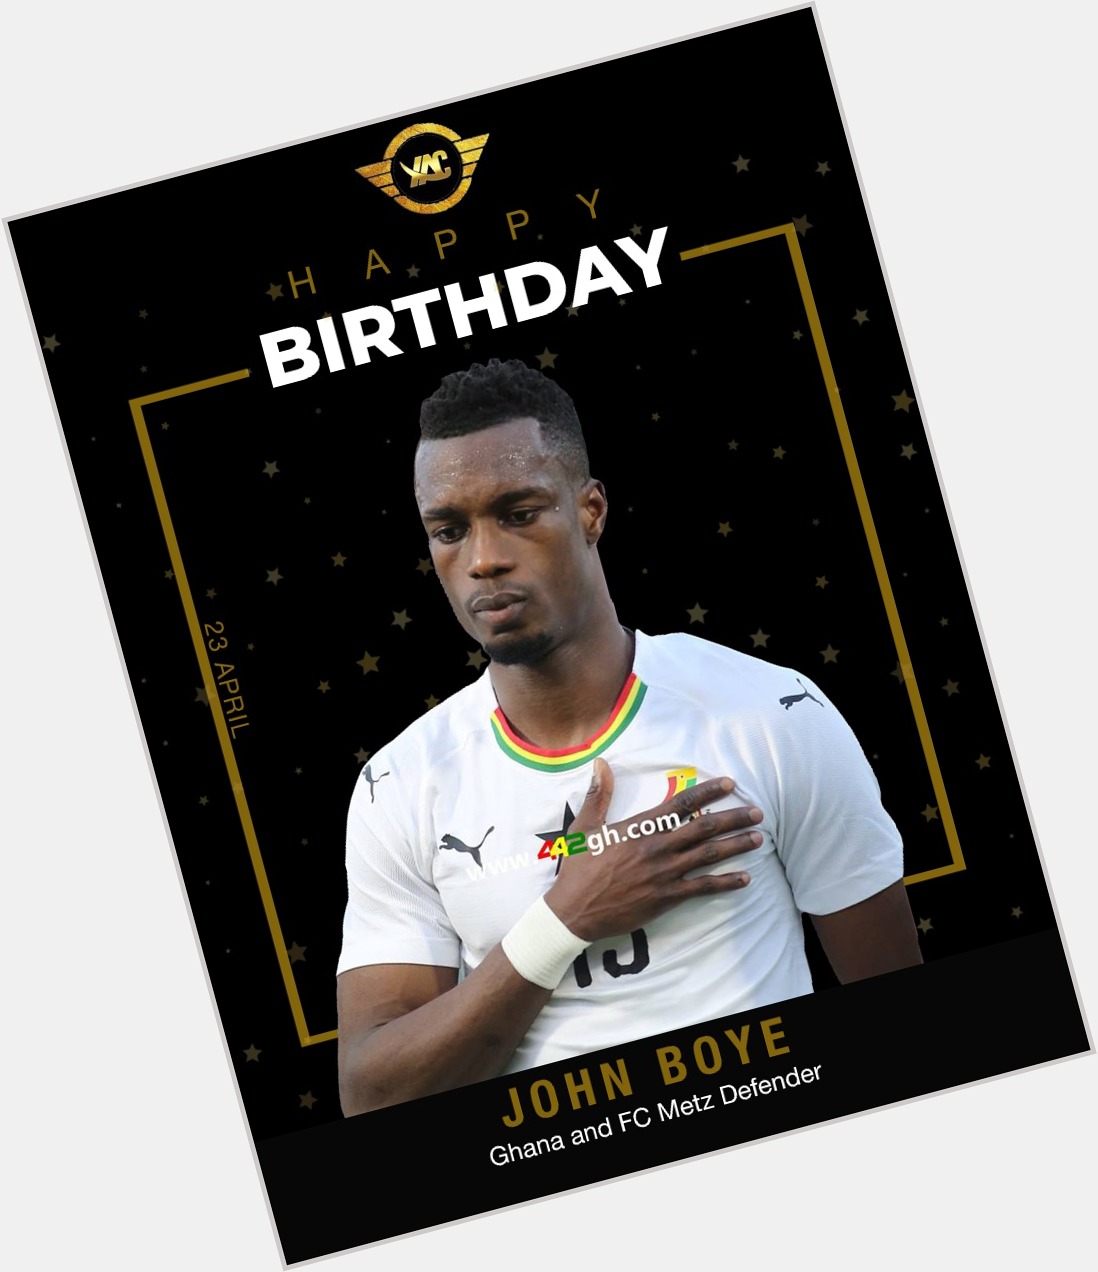 We wish Ghana and FC Metz defender John Boye a happy birthday        